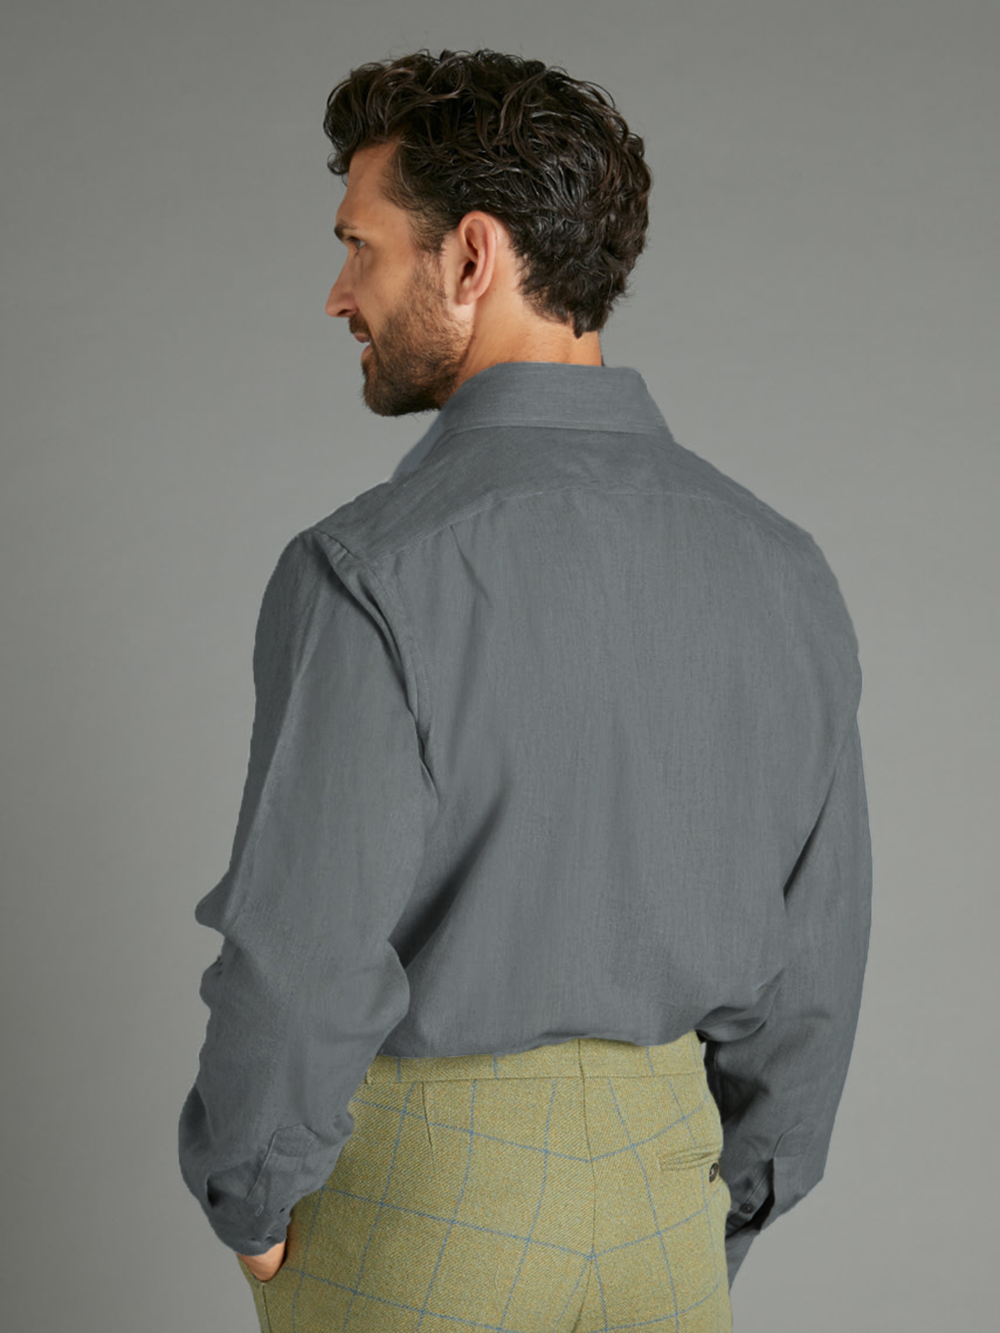 Regular Fit Shirt - Brushed Cotton Grey